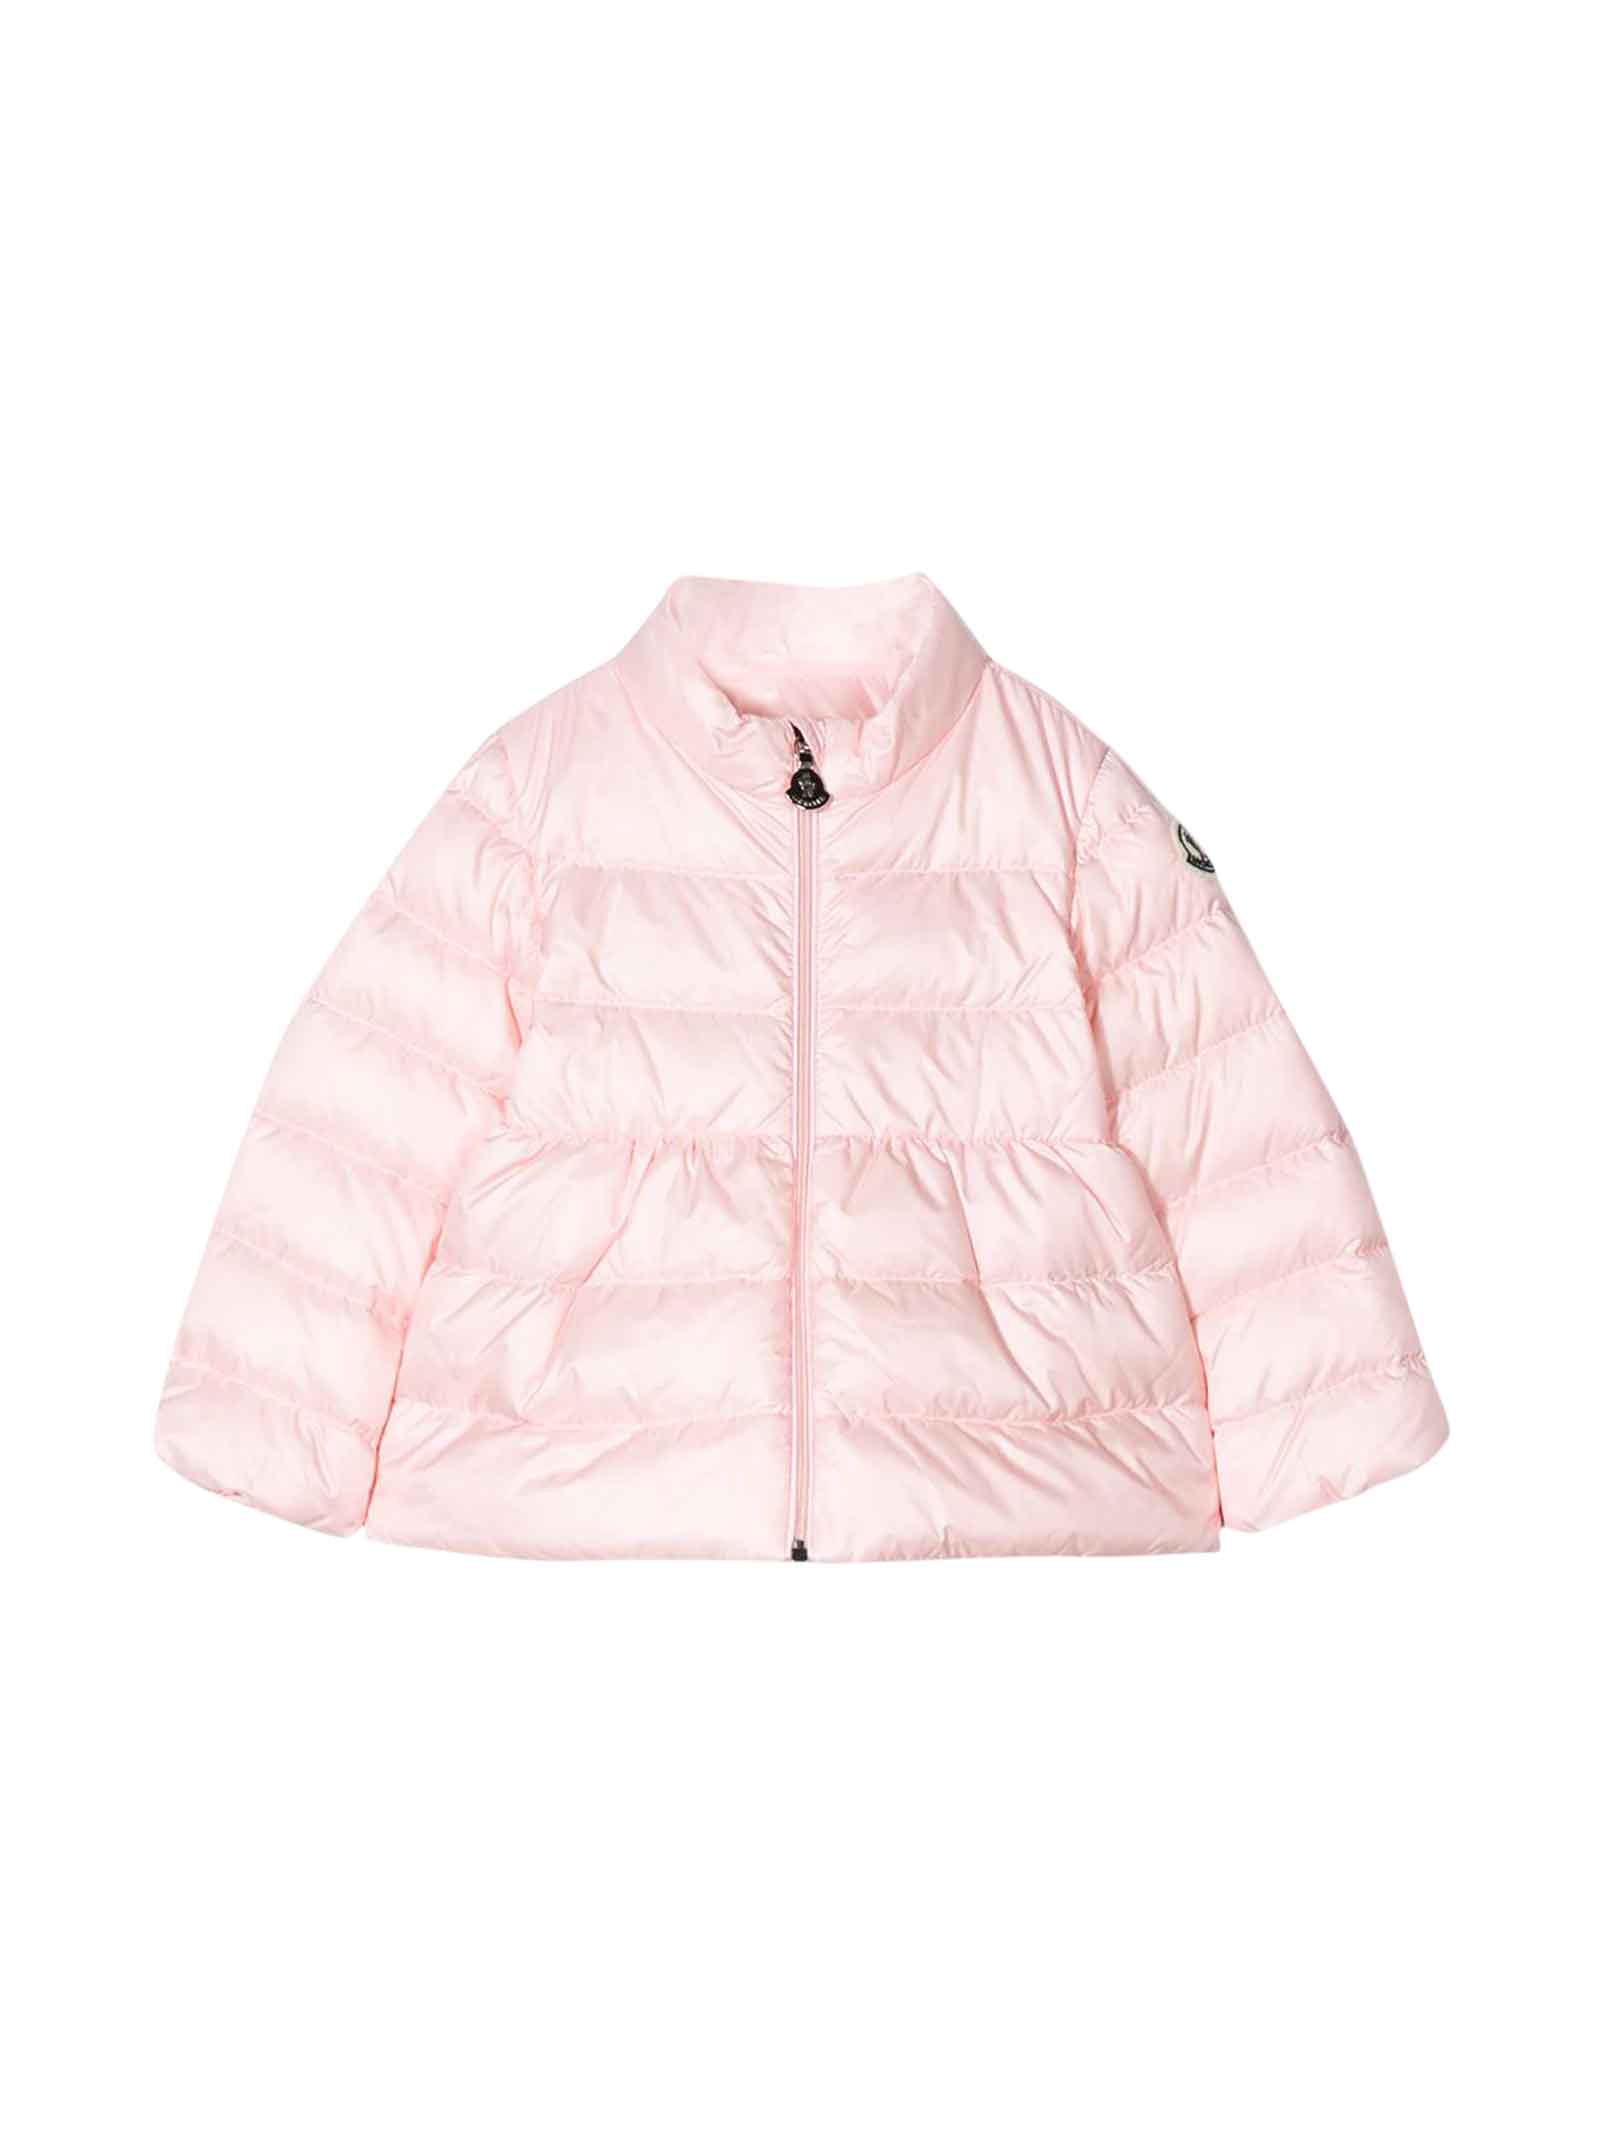 Moncler Babies' Light Pink Lightweight Jacket Joelle Model In Rosa ...